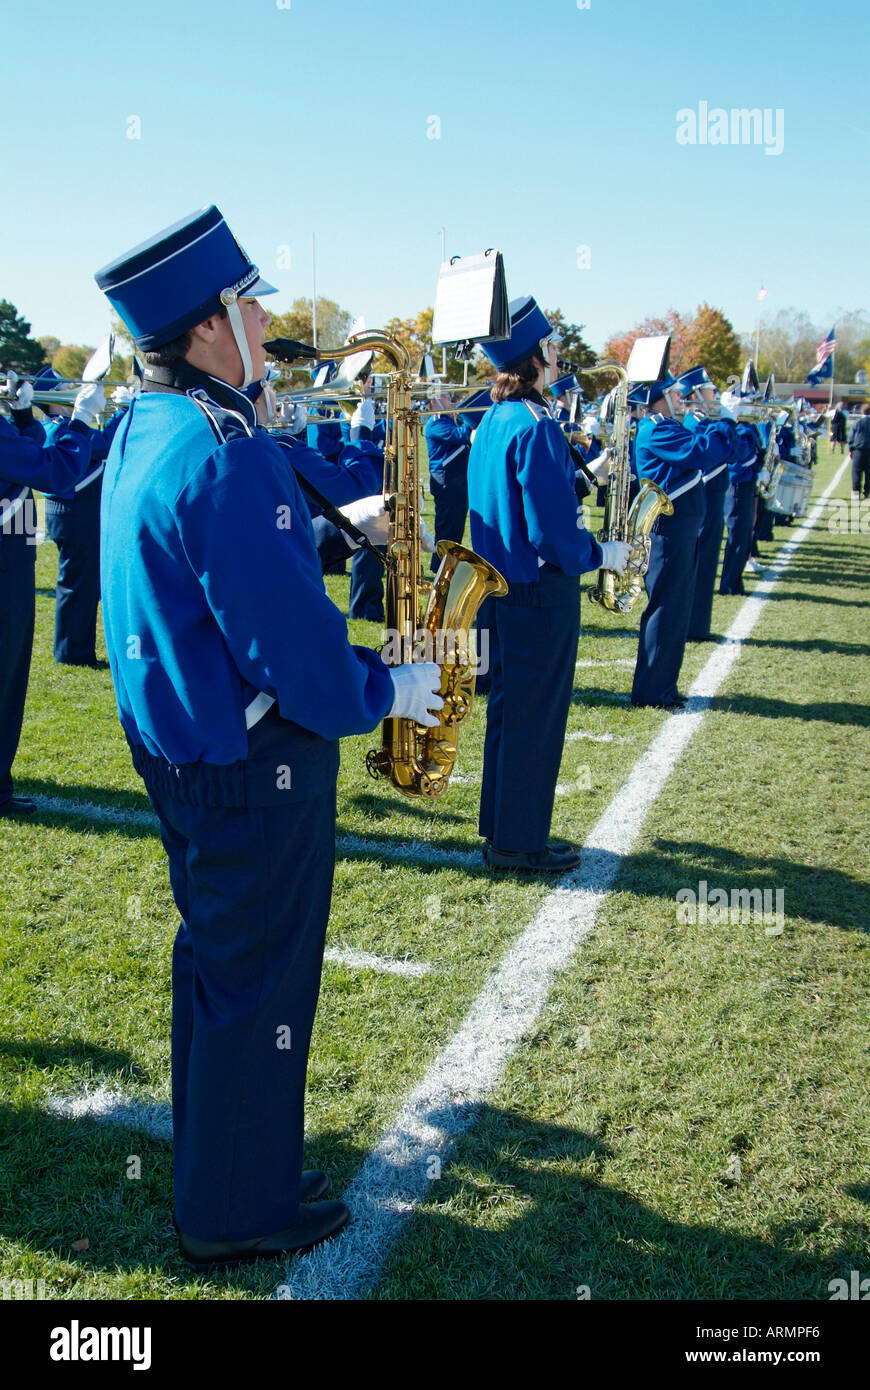 High school marching band esegue durante una partita di calcio Foto Stock